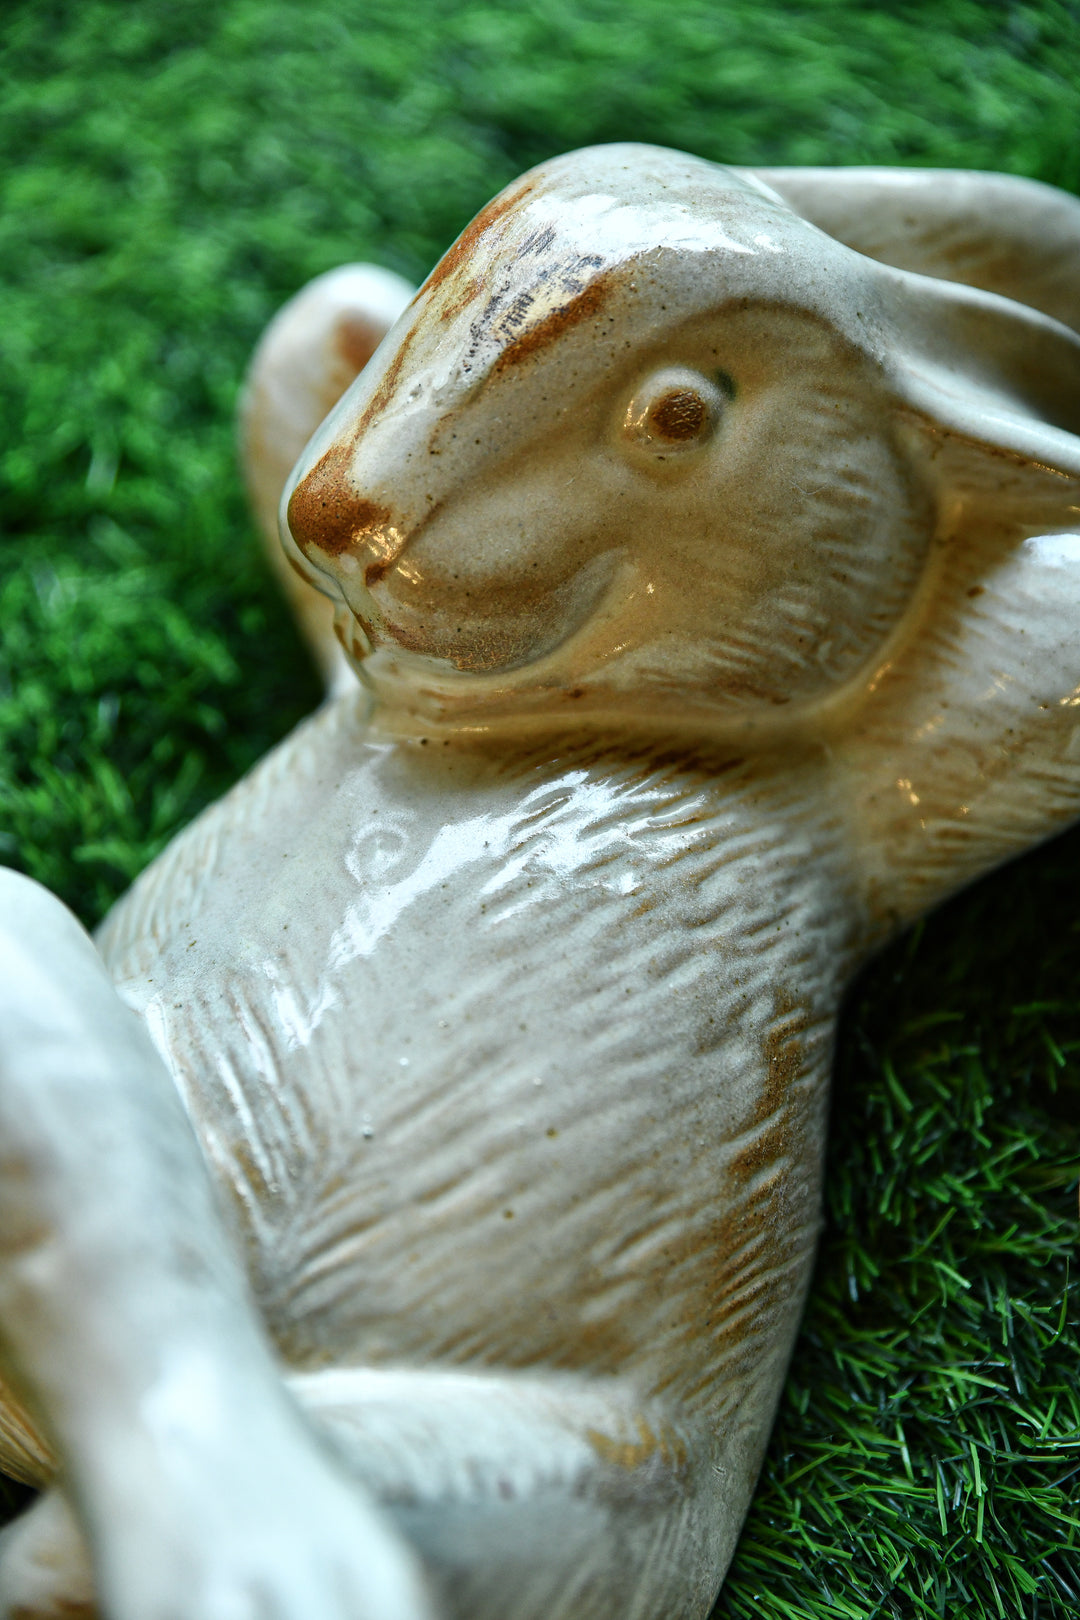 Ceramic Sleeping Rabbit Garden Figurine